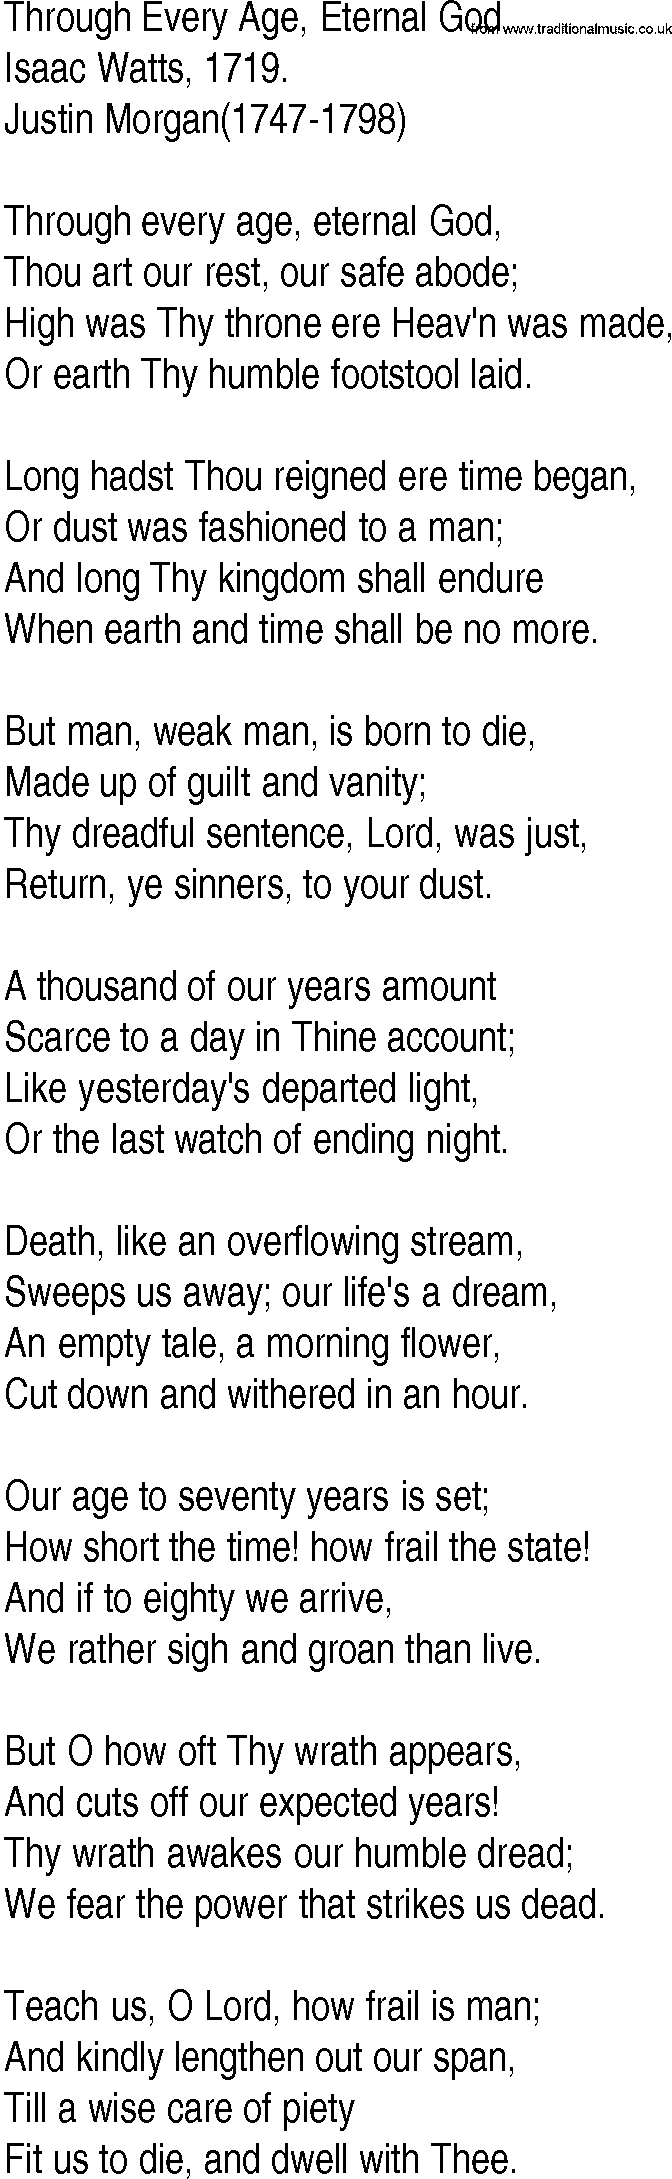 Hymn and Gospel Song: Through Every Age, Eternal God by Isaac Watts lyrics